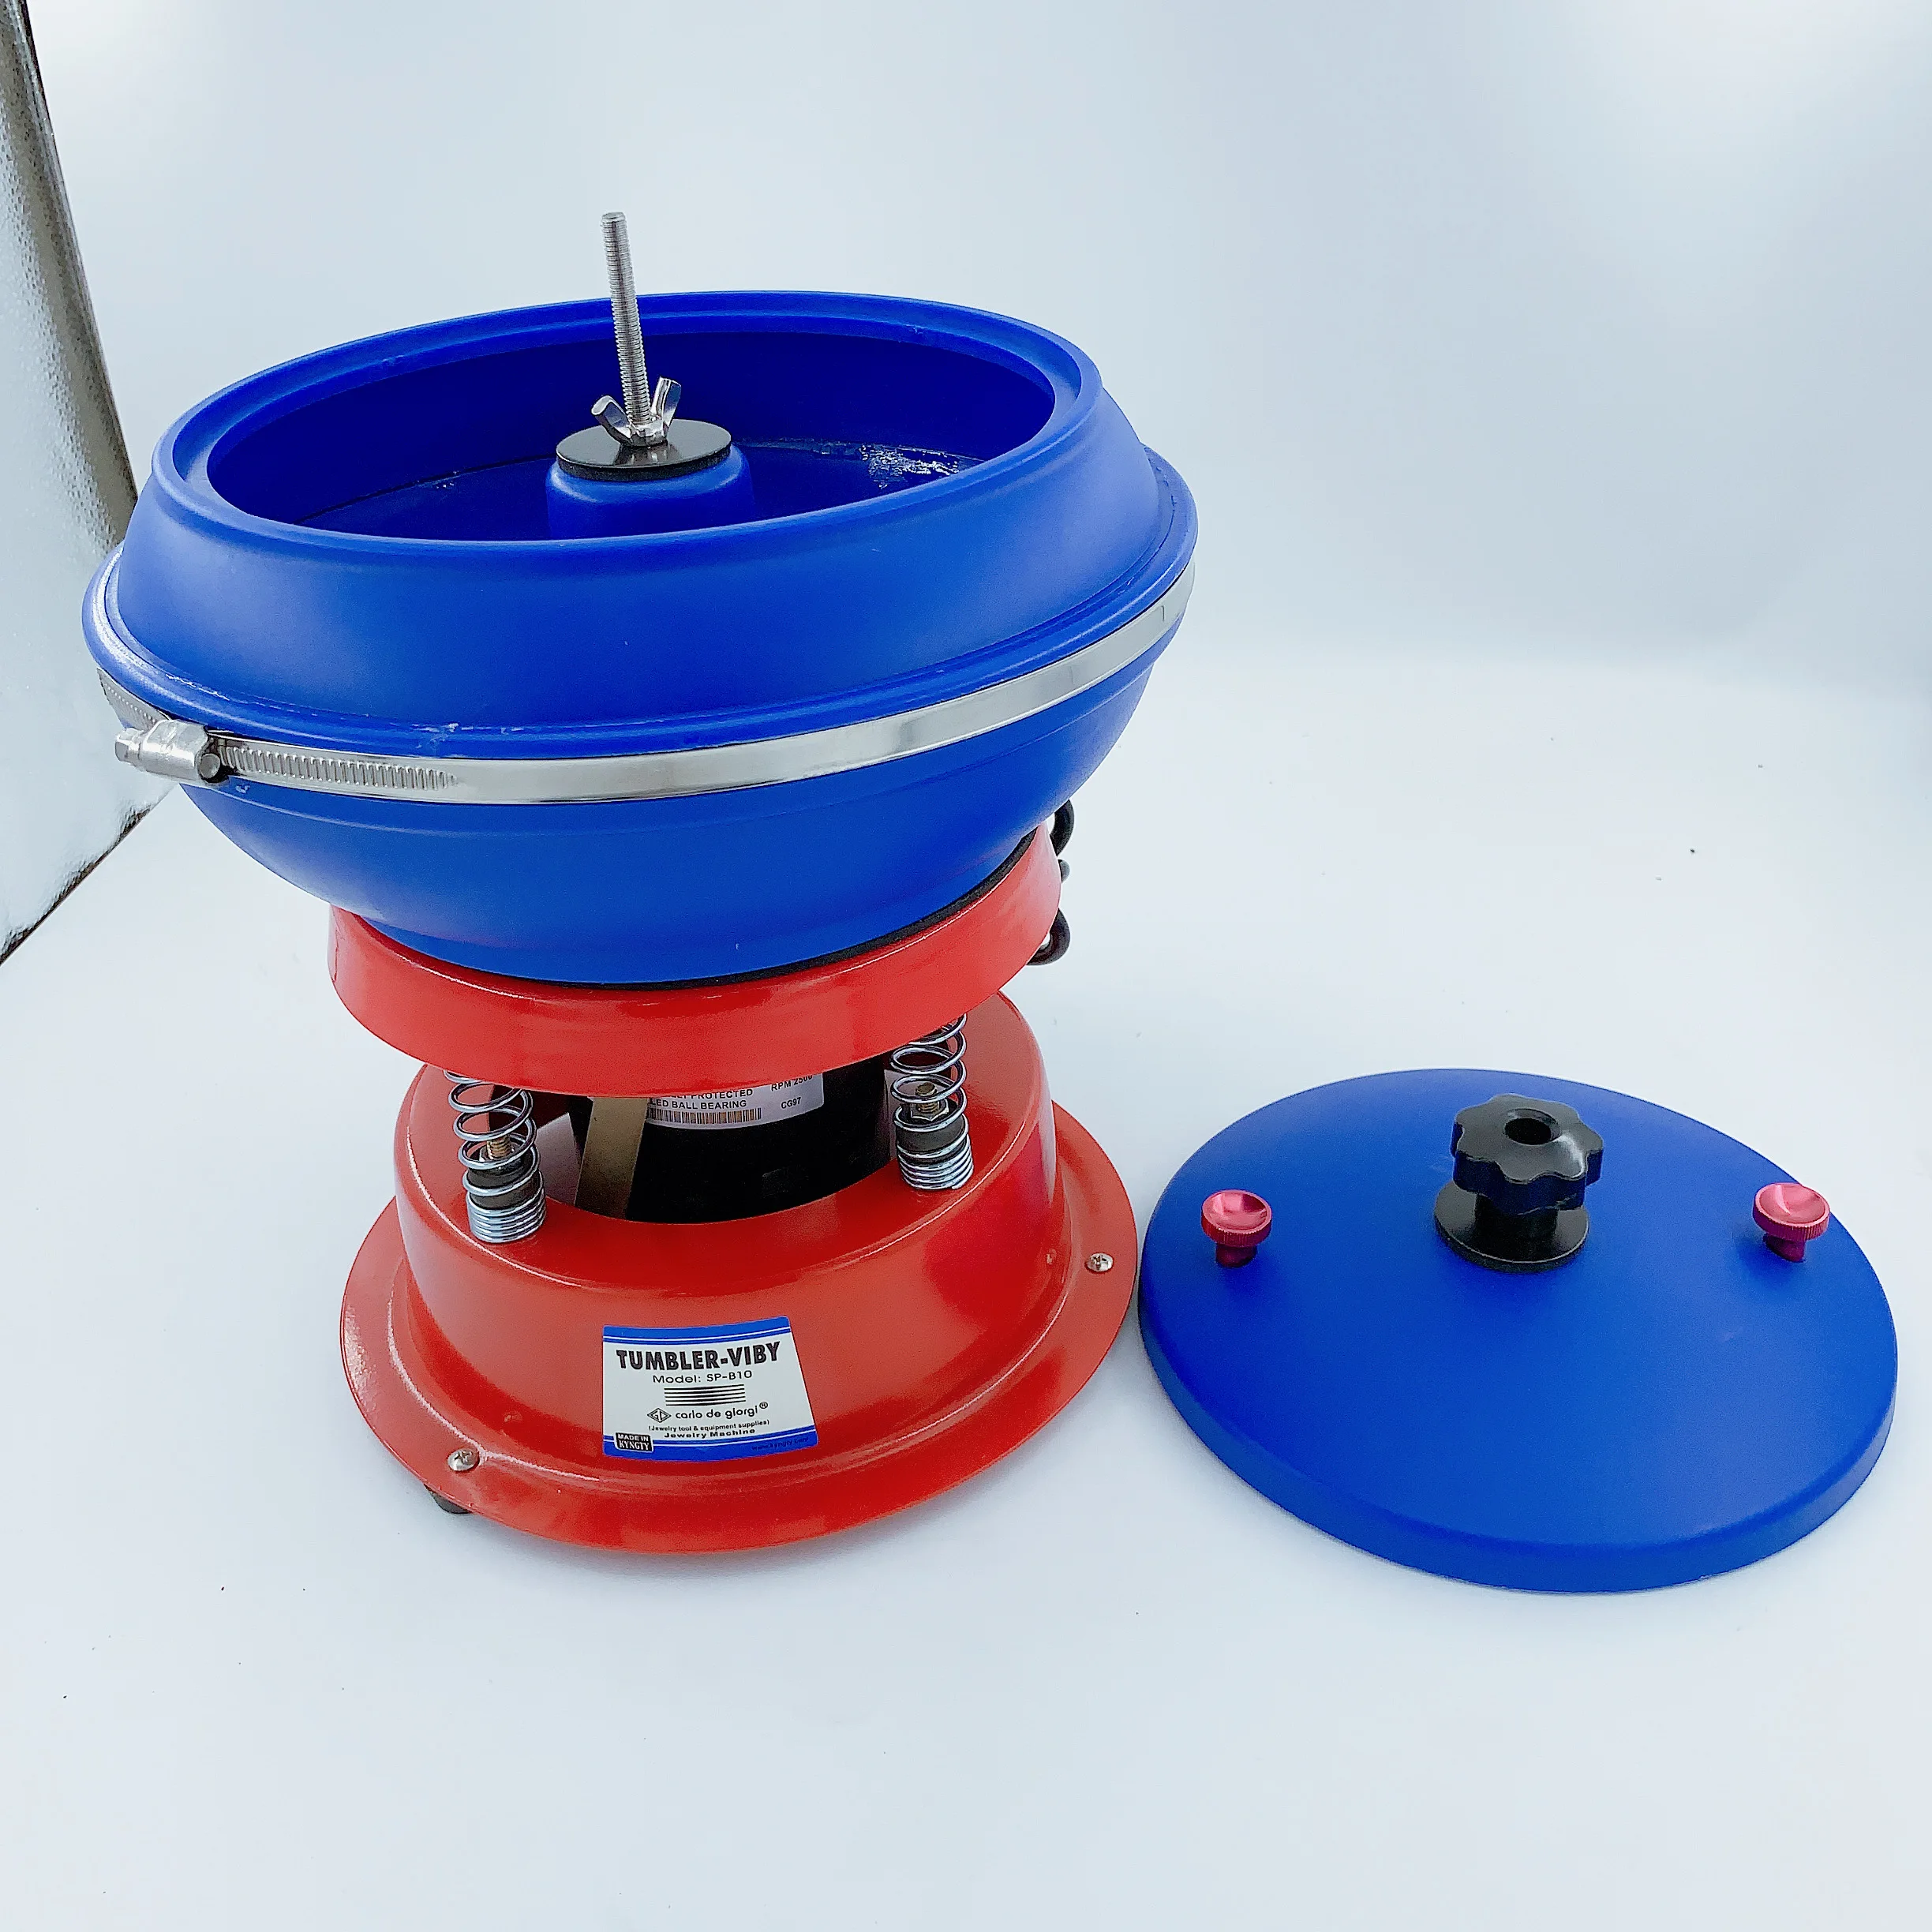 vibratory tumbler,mini Vibrator Tumbler, Wet Dry Polisher,jewelry Polishing Machine gold rotary burnishing motor